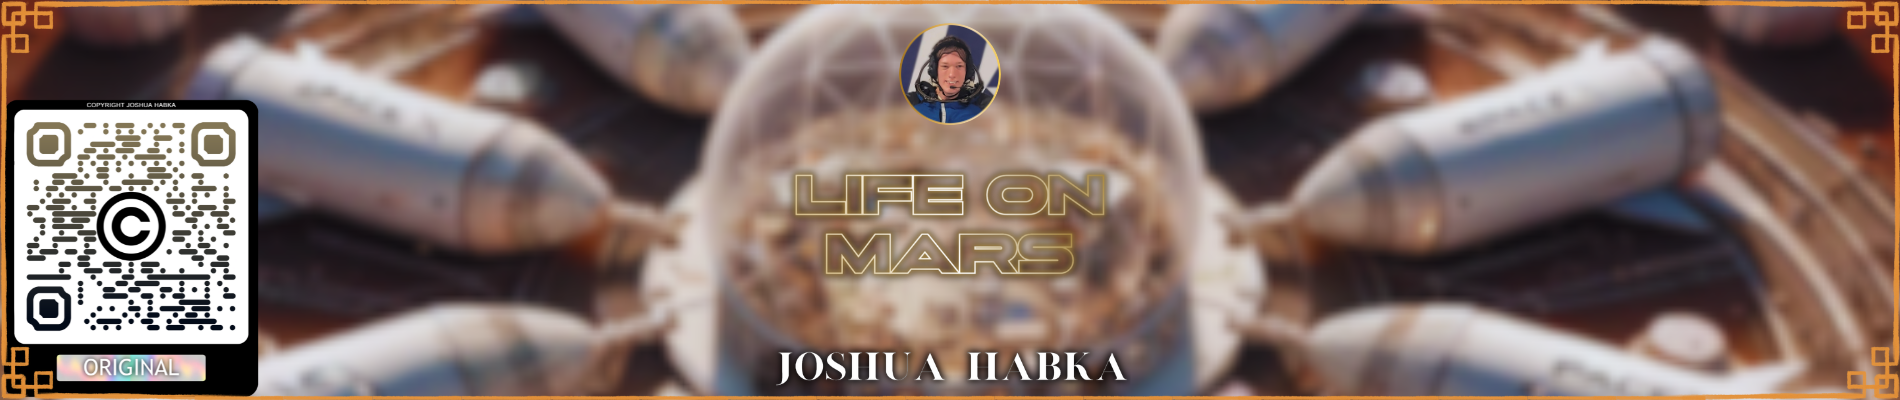 Reflections From The Life on Mars Simulation?—?Josh Habka